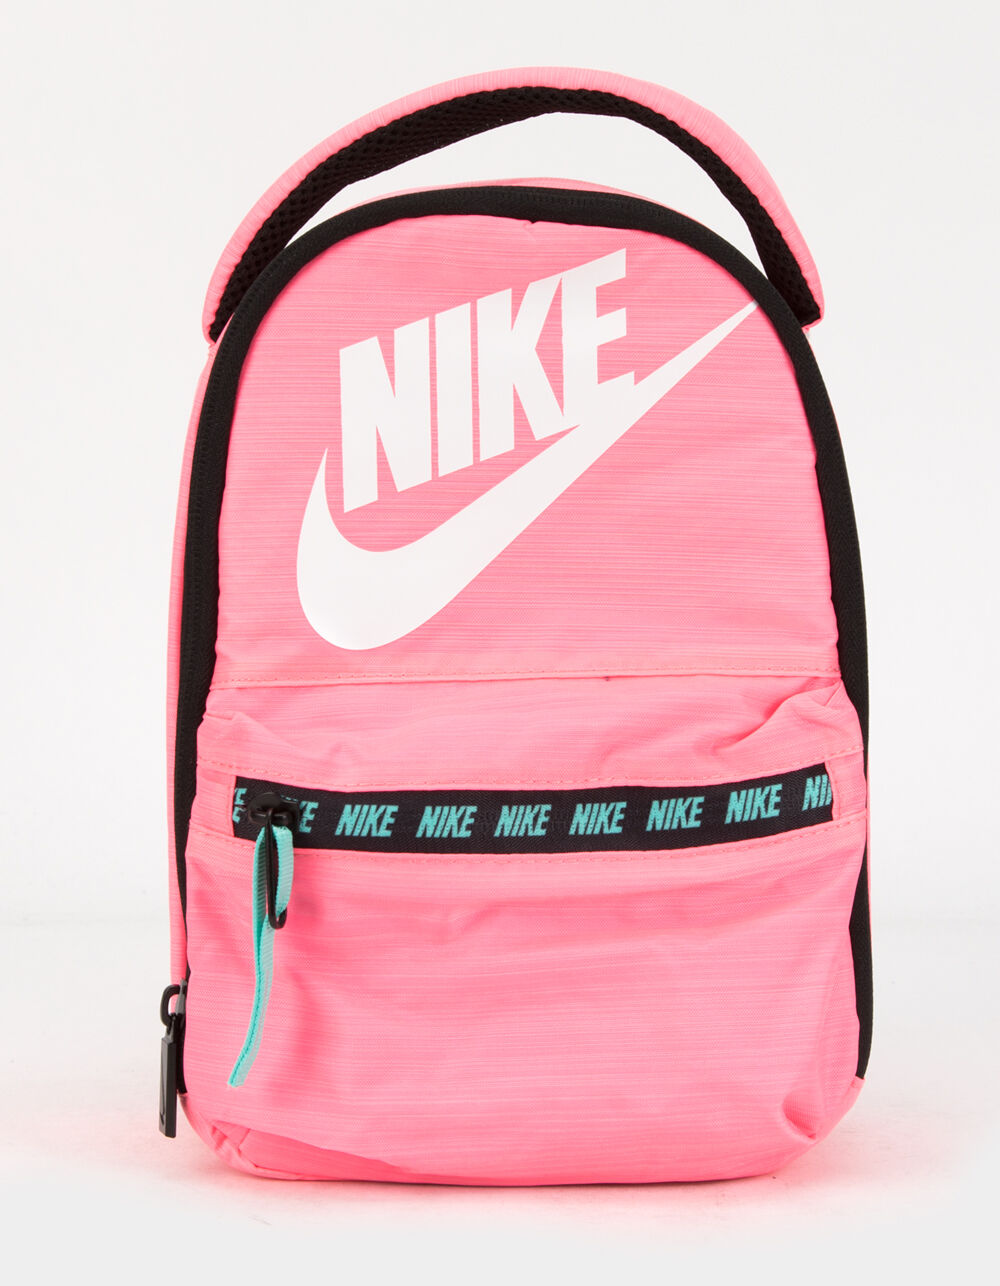 NIKE Futura Space Dye Pink Lunch Bag - PINK | Tillys